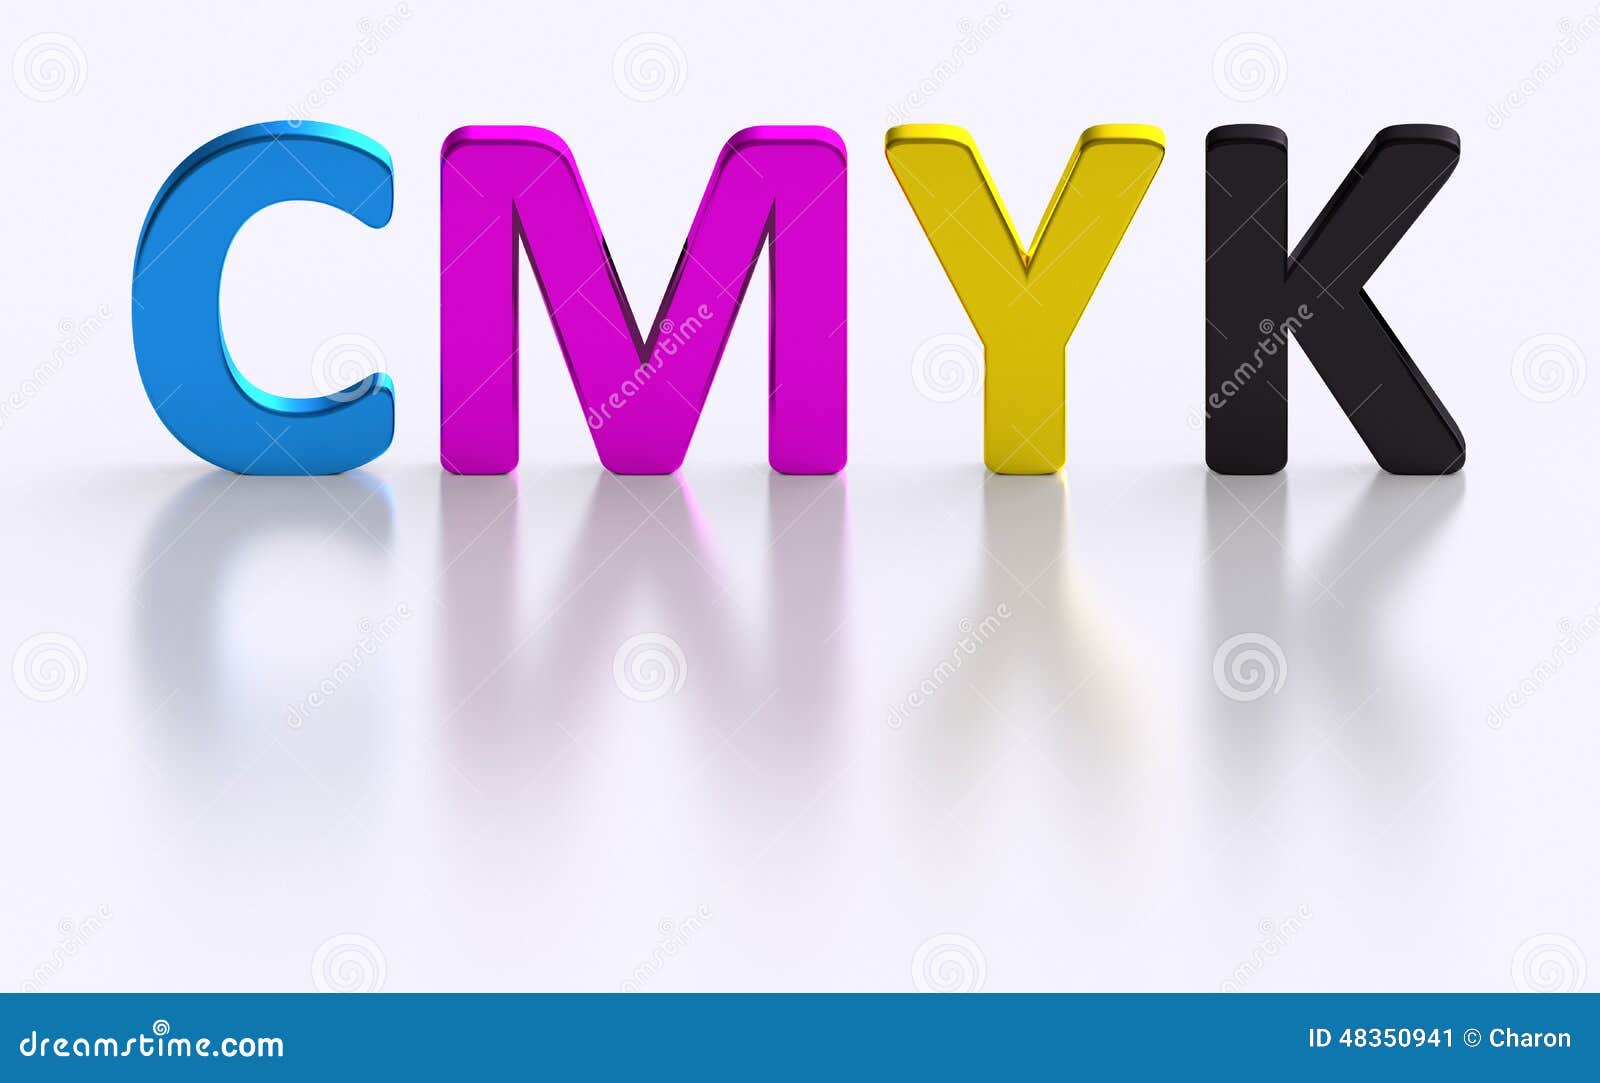 CMYK Letter Four Process Printing Stock Illustration - Illustration of colour, 48350941